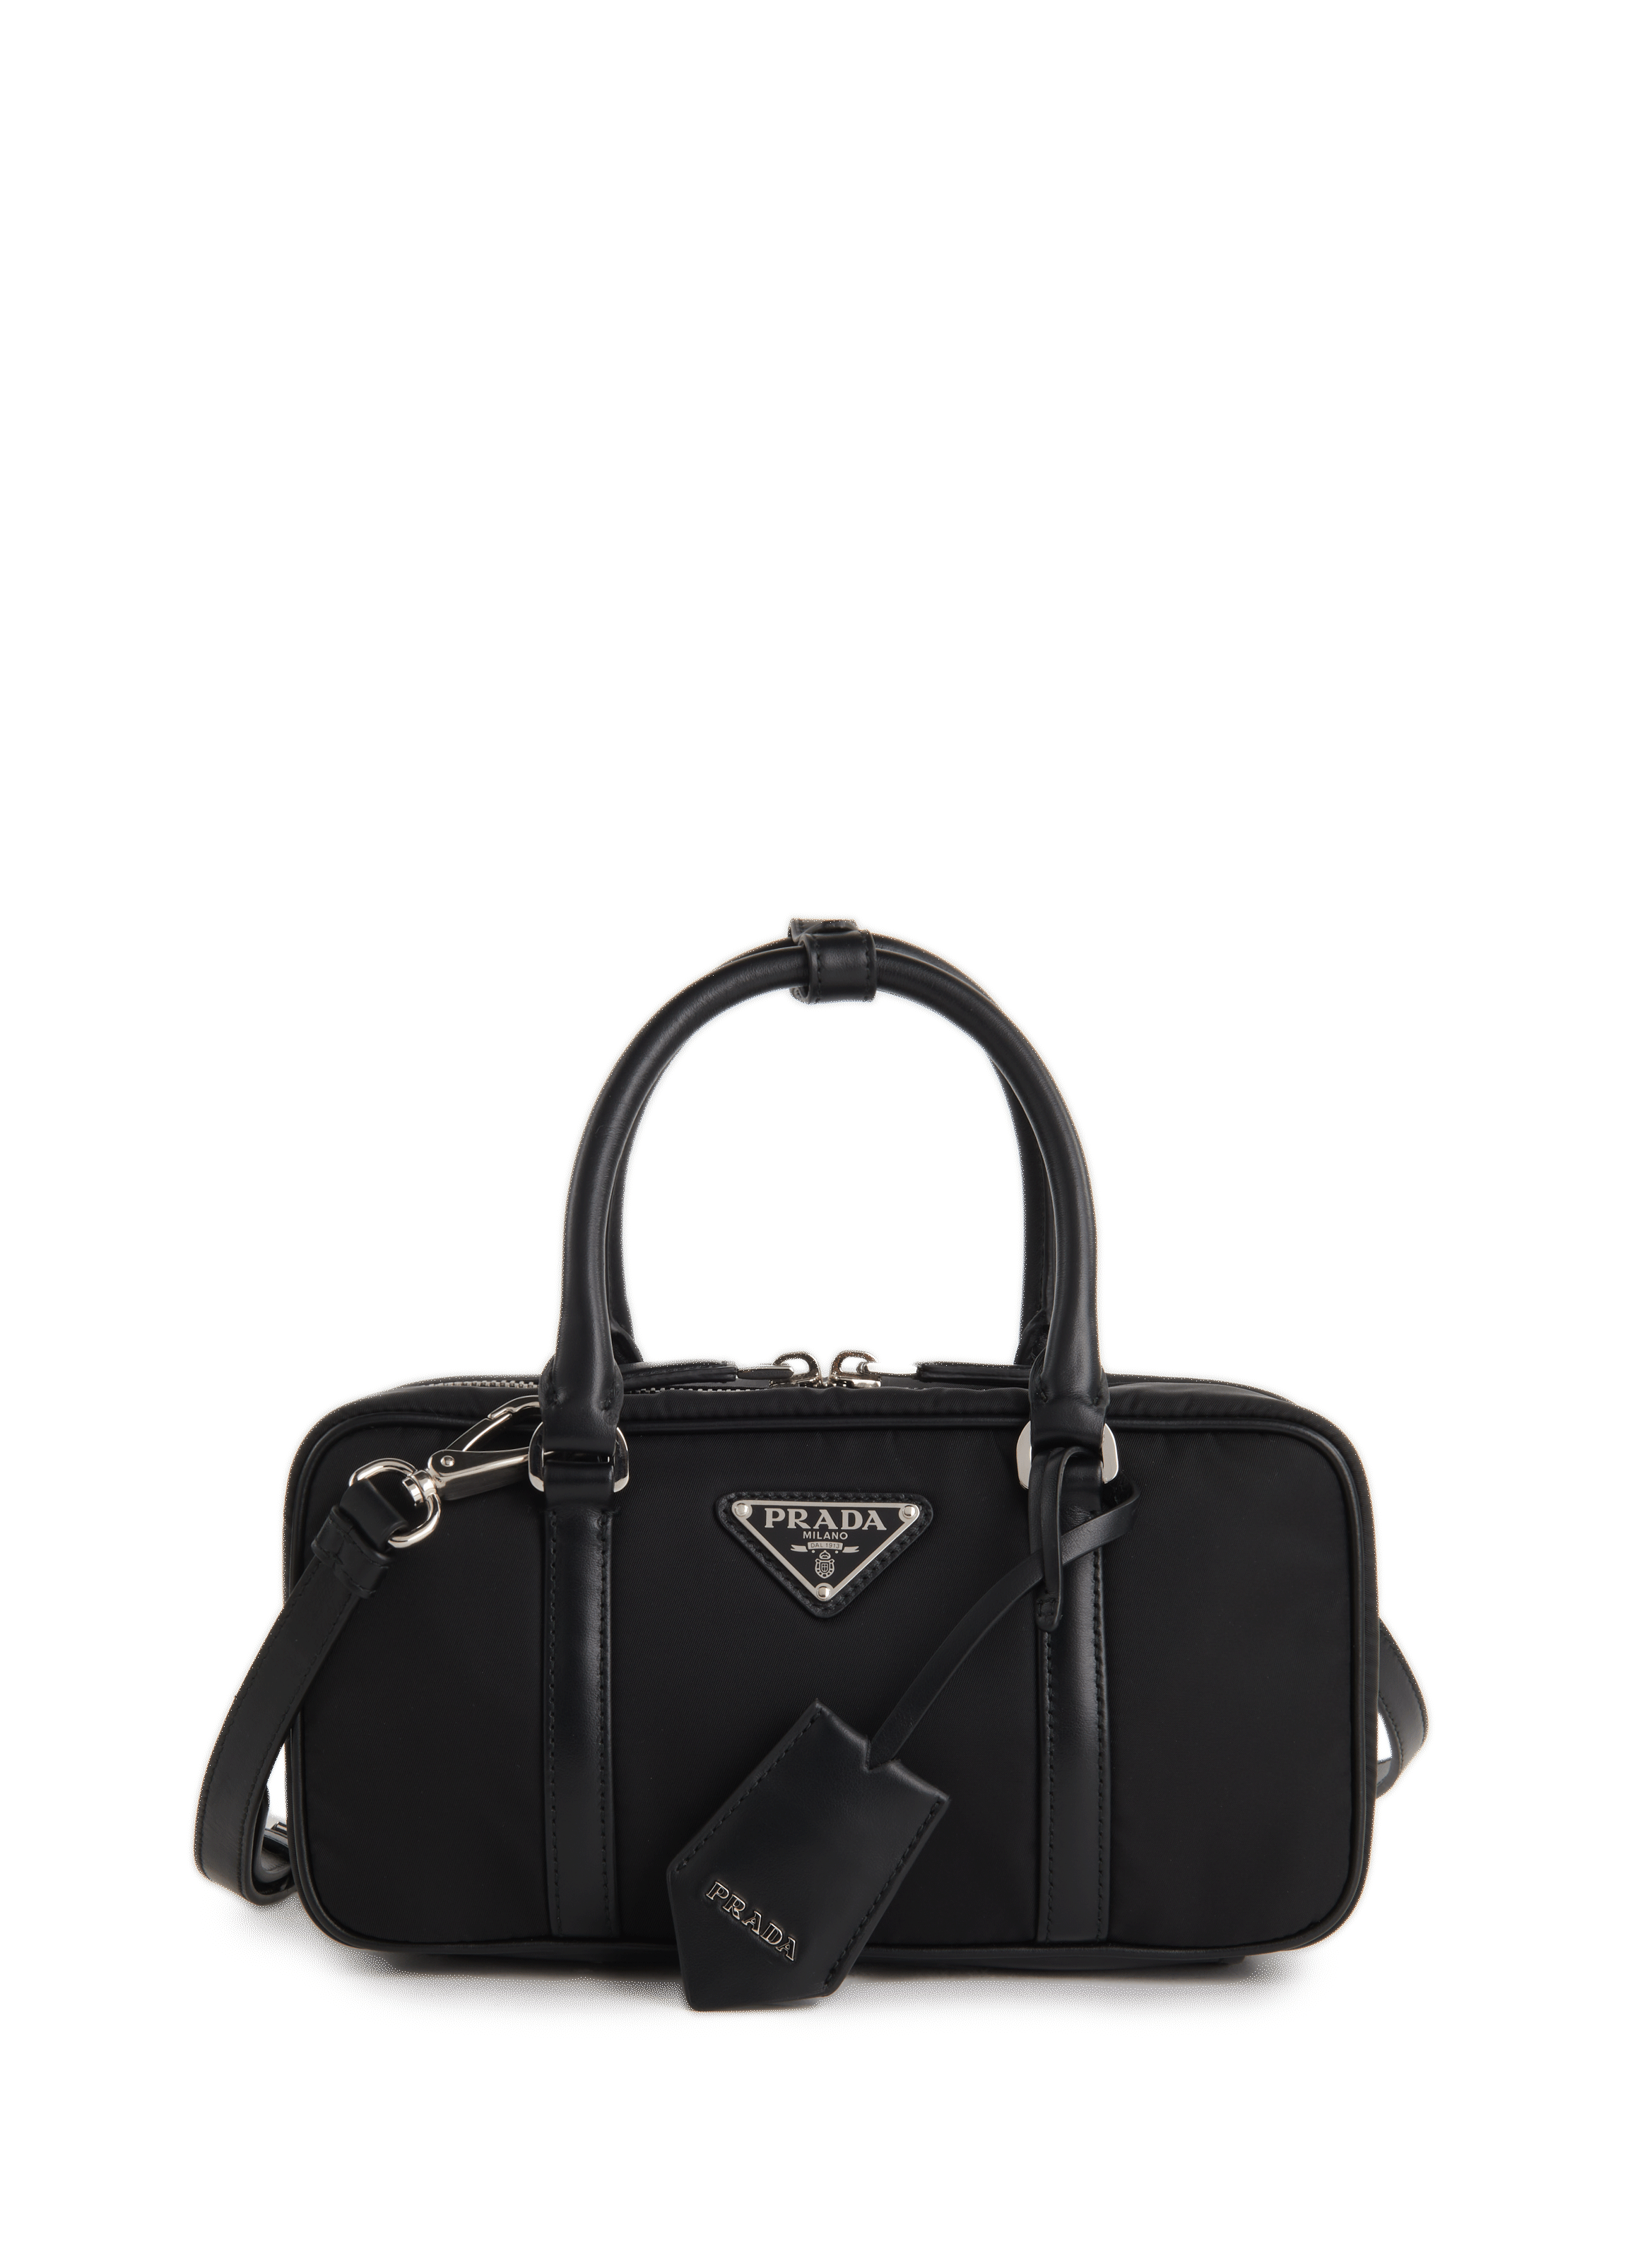 Help me find my first big girl purse : r/handbags